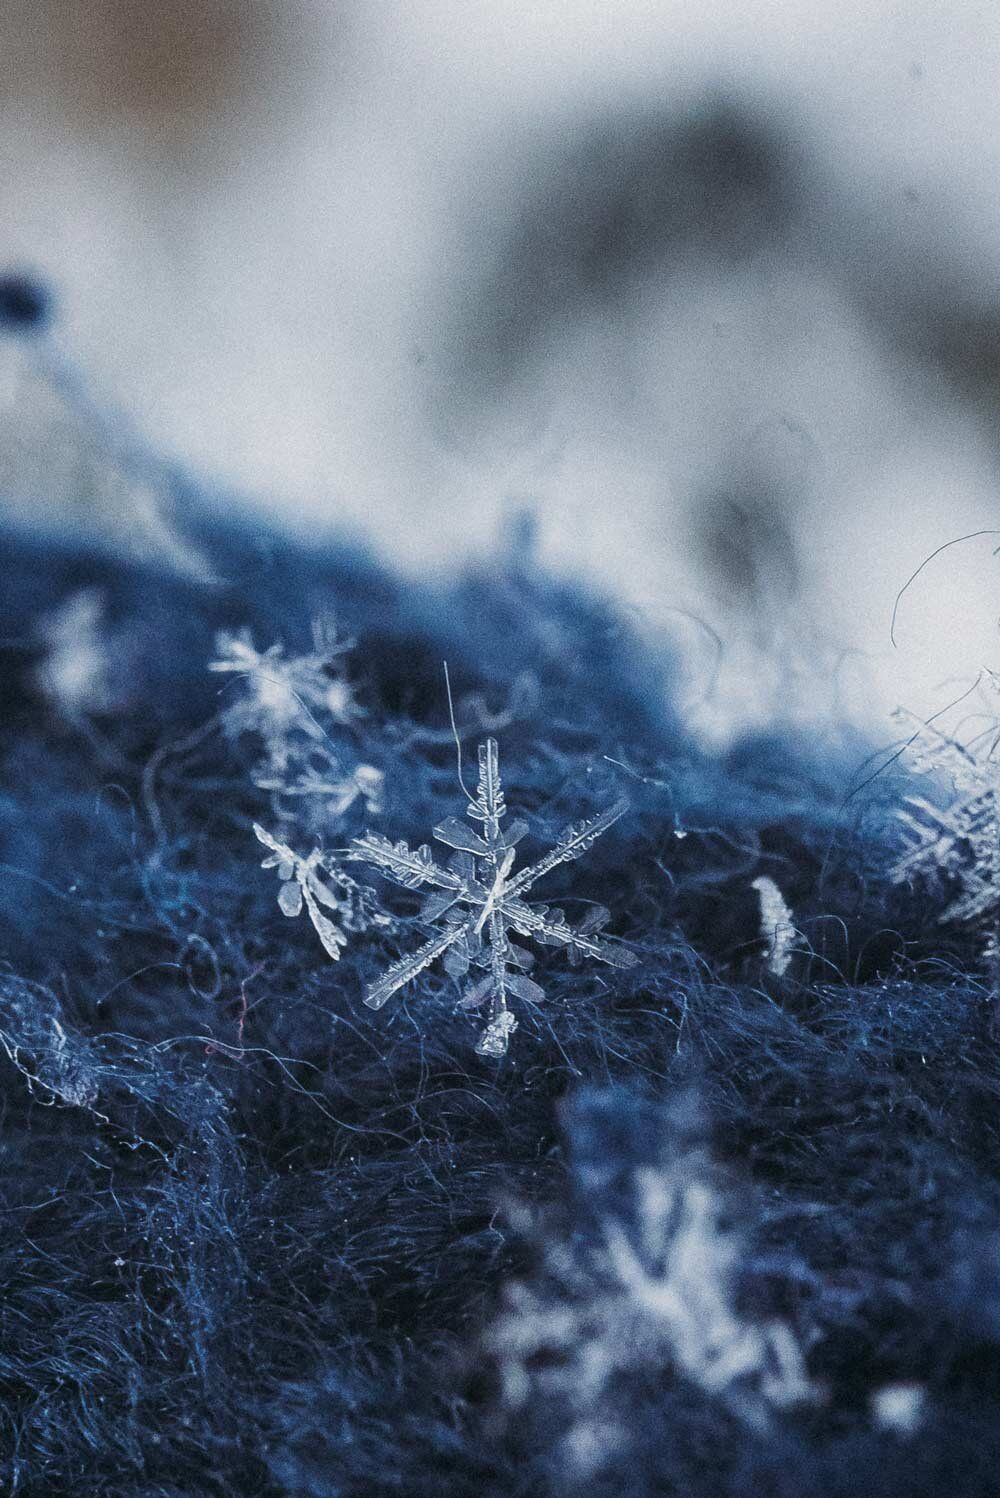 A snowflake on a dark blue woolen fabric - Snowflake